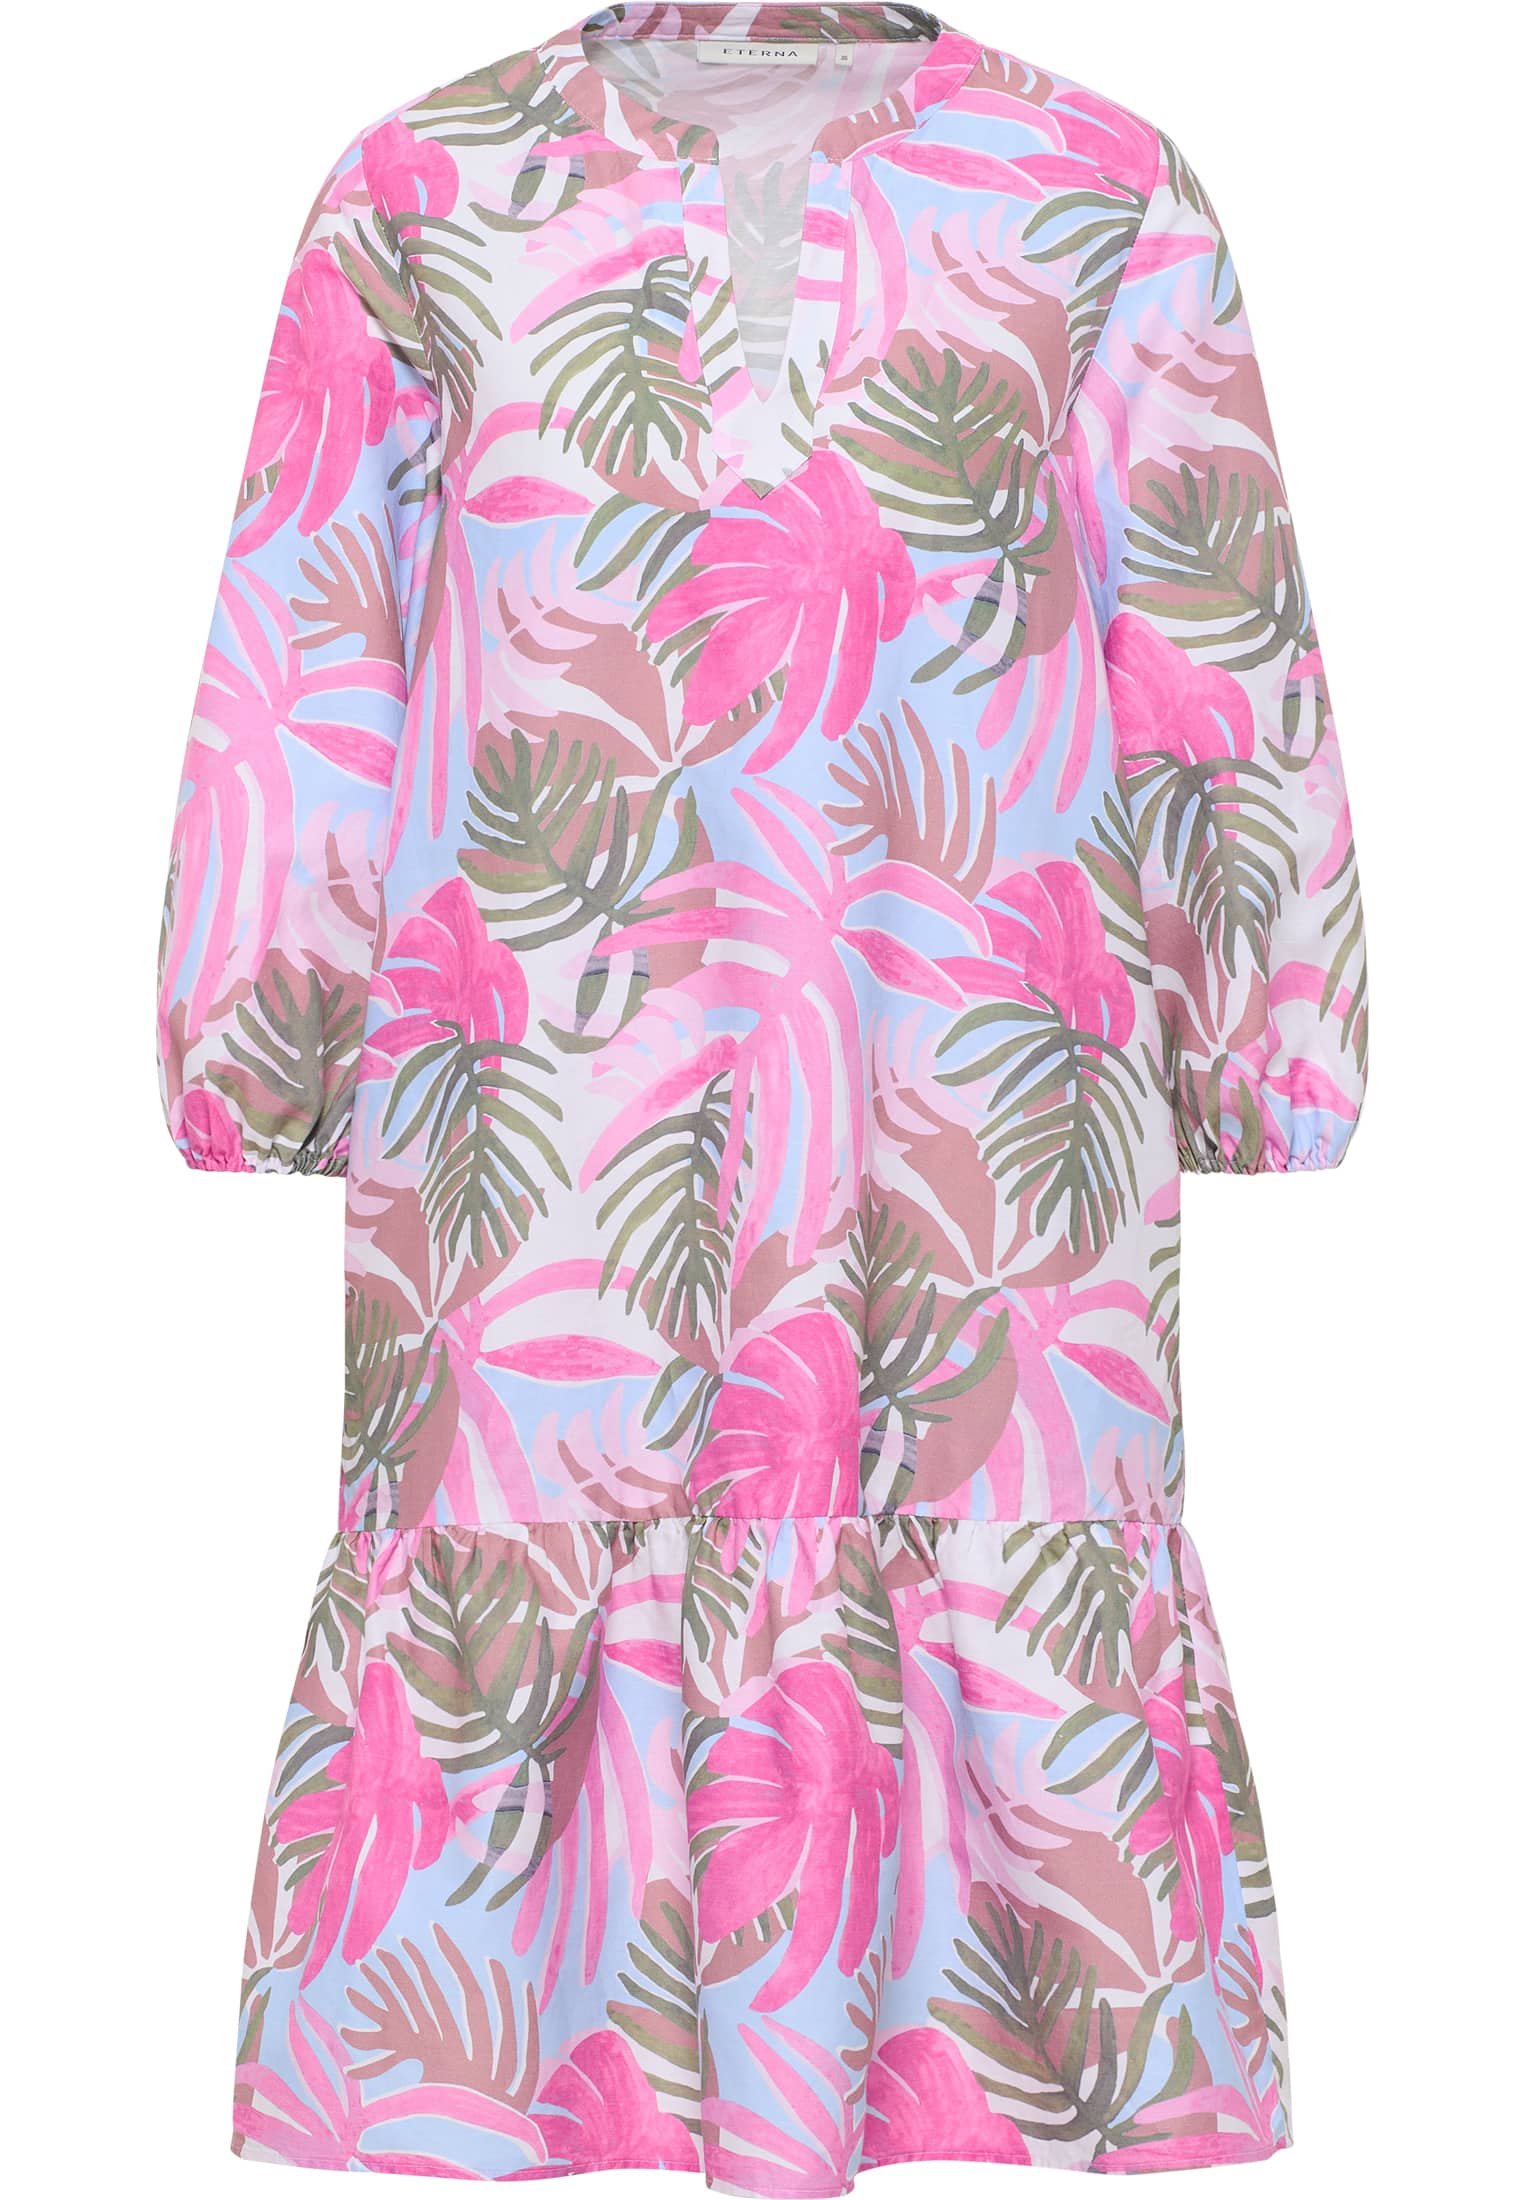 3/4 printed | rose dress | rose | sleeves | in Shirt 46 2DR00246-15-11-46-3/4